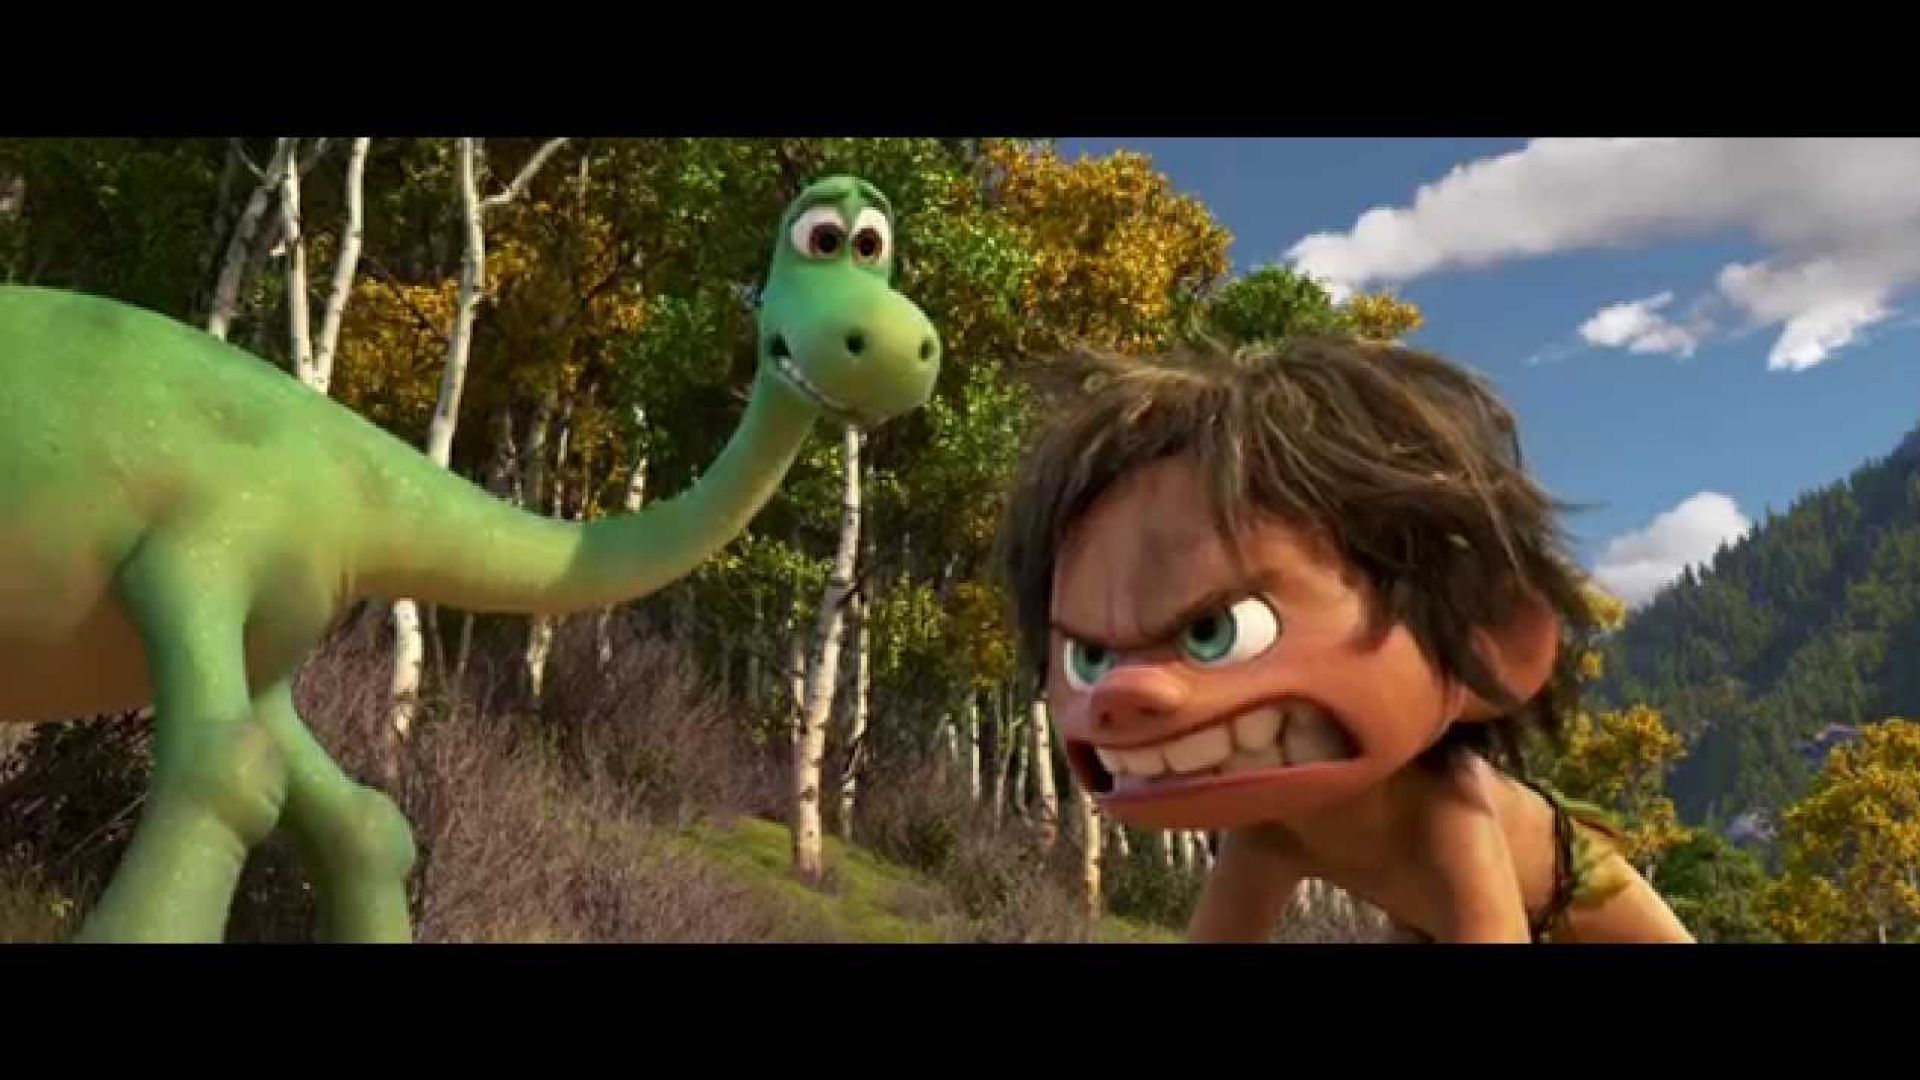 The Good Dinosaur Gets a New UK Trailer